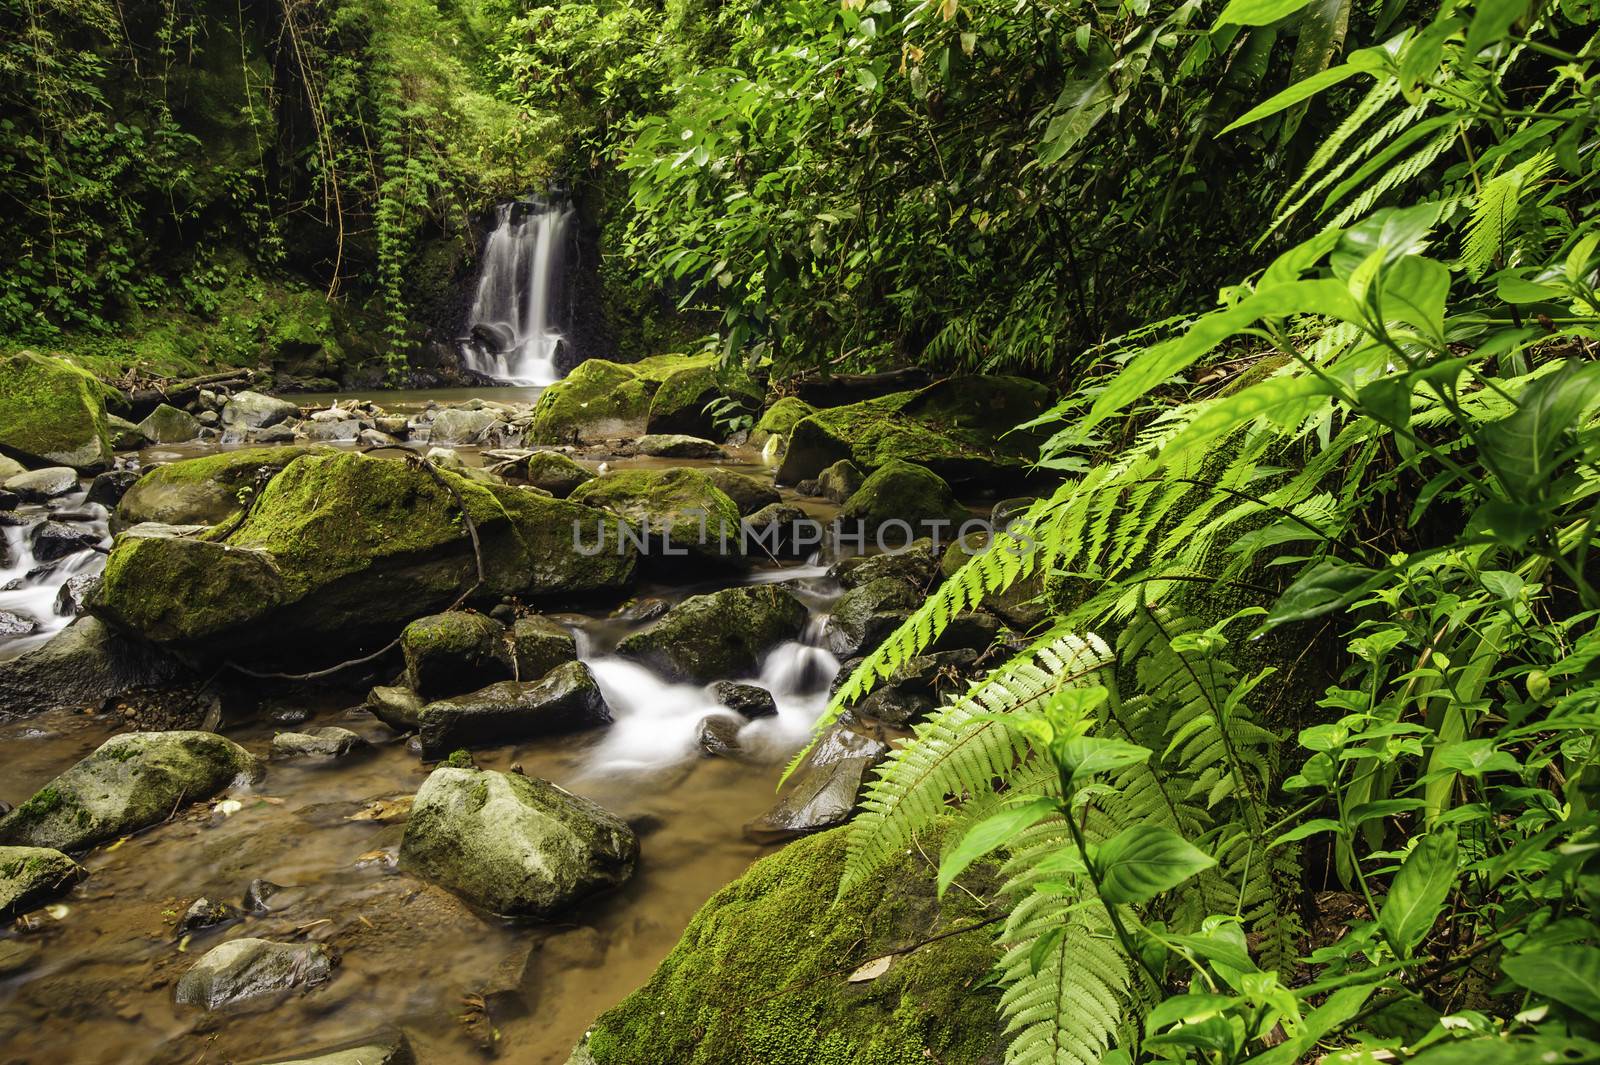 Rocky mountain stream in a Costa Rica rainforest.